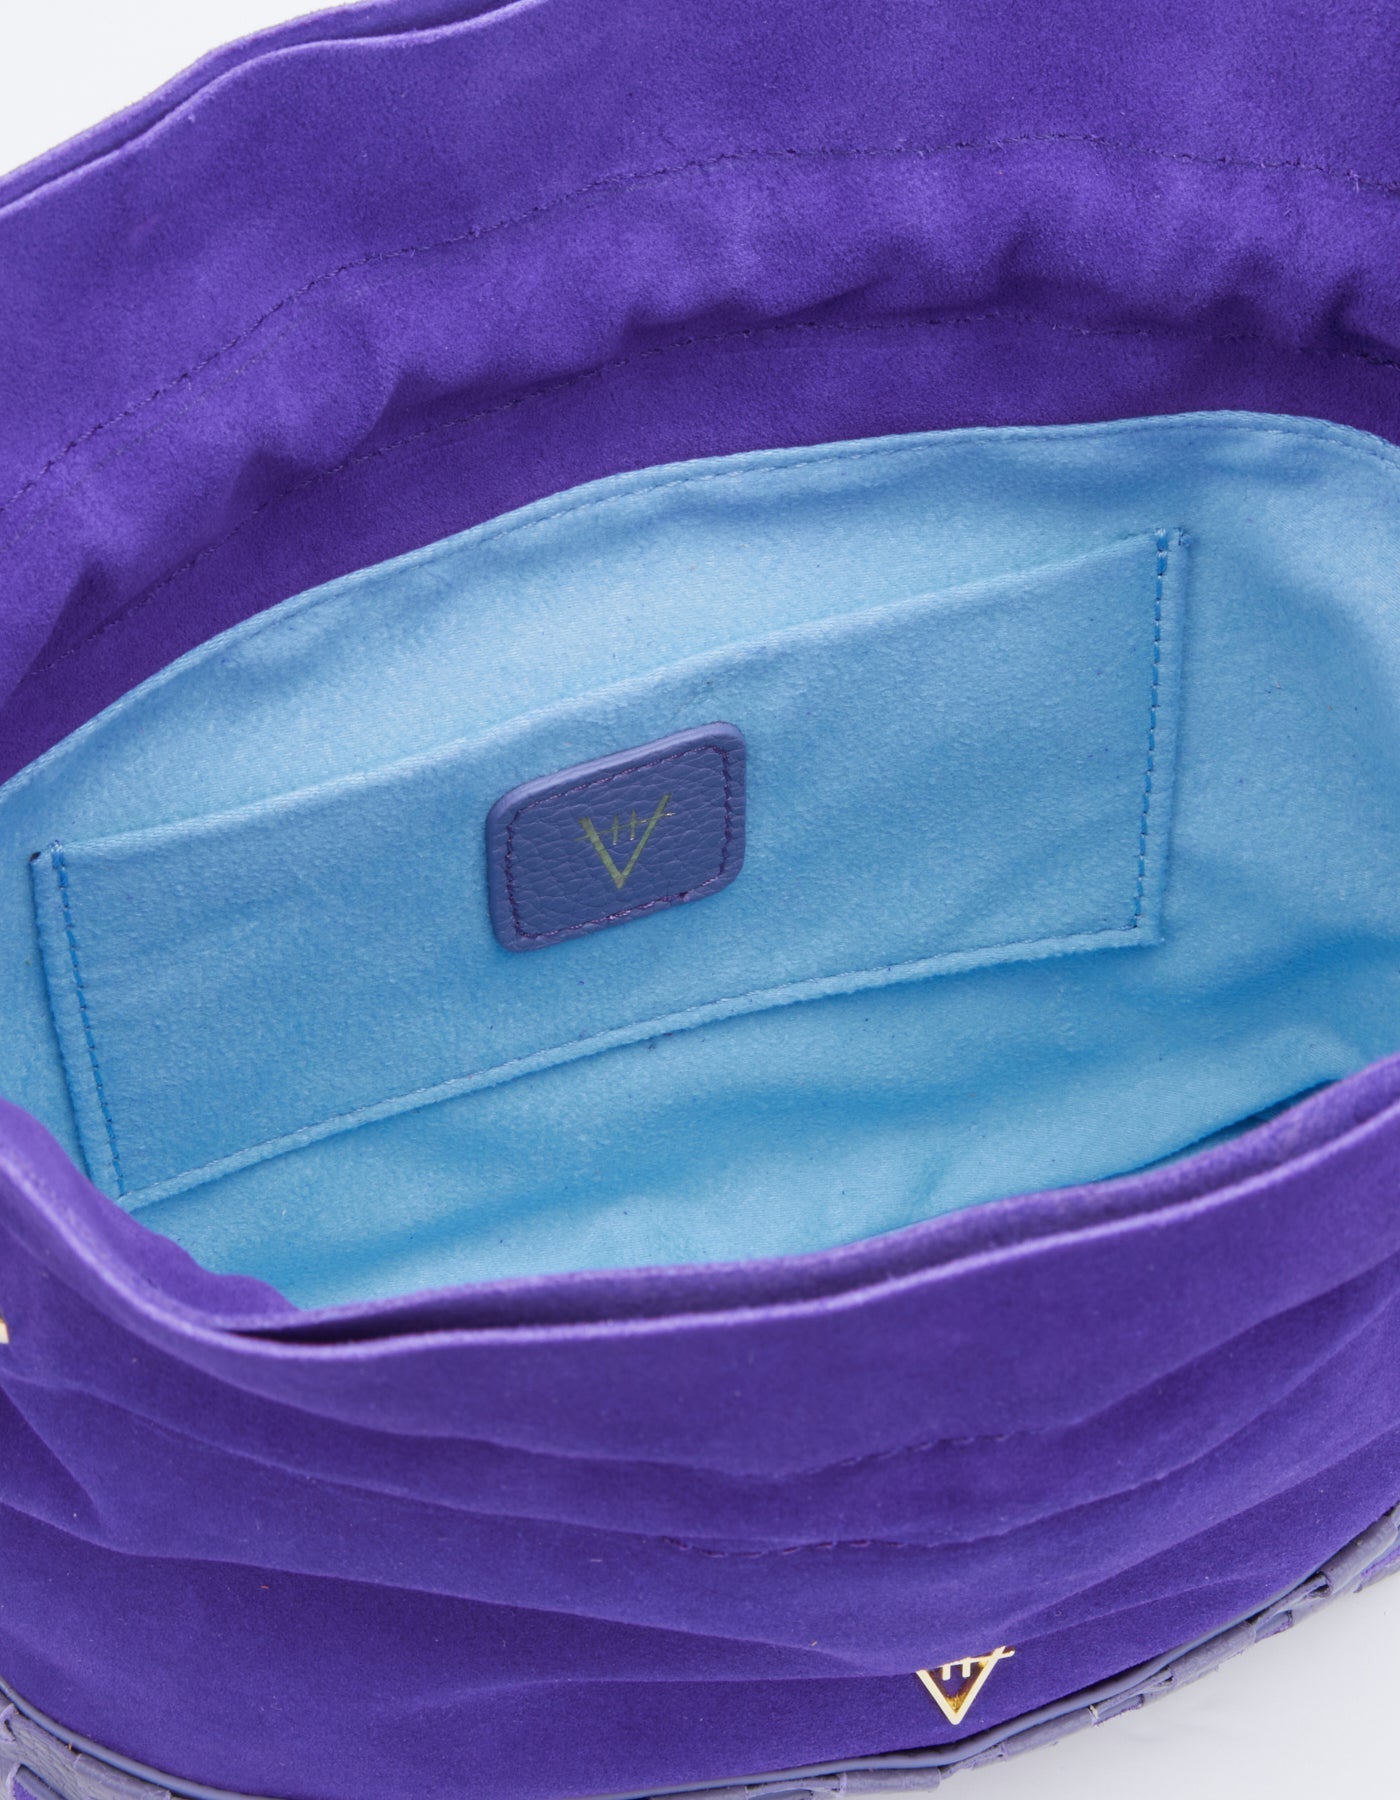 HiVa Atelier - Lavinia Bucket Bag Lavender Suede